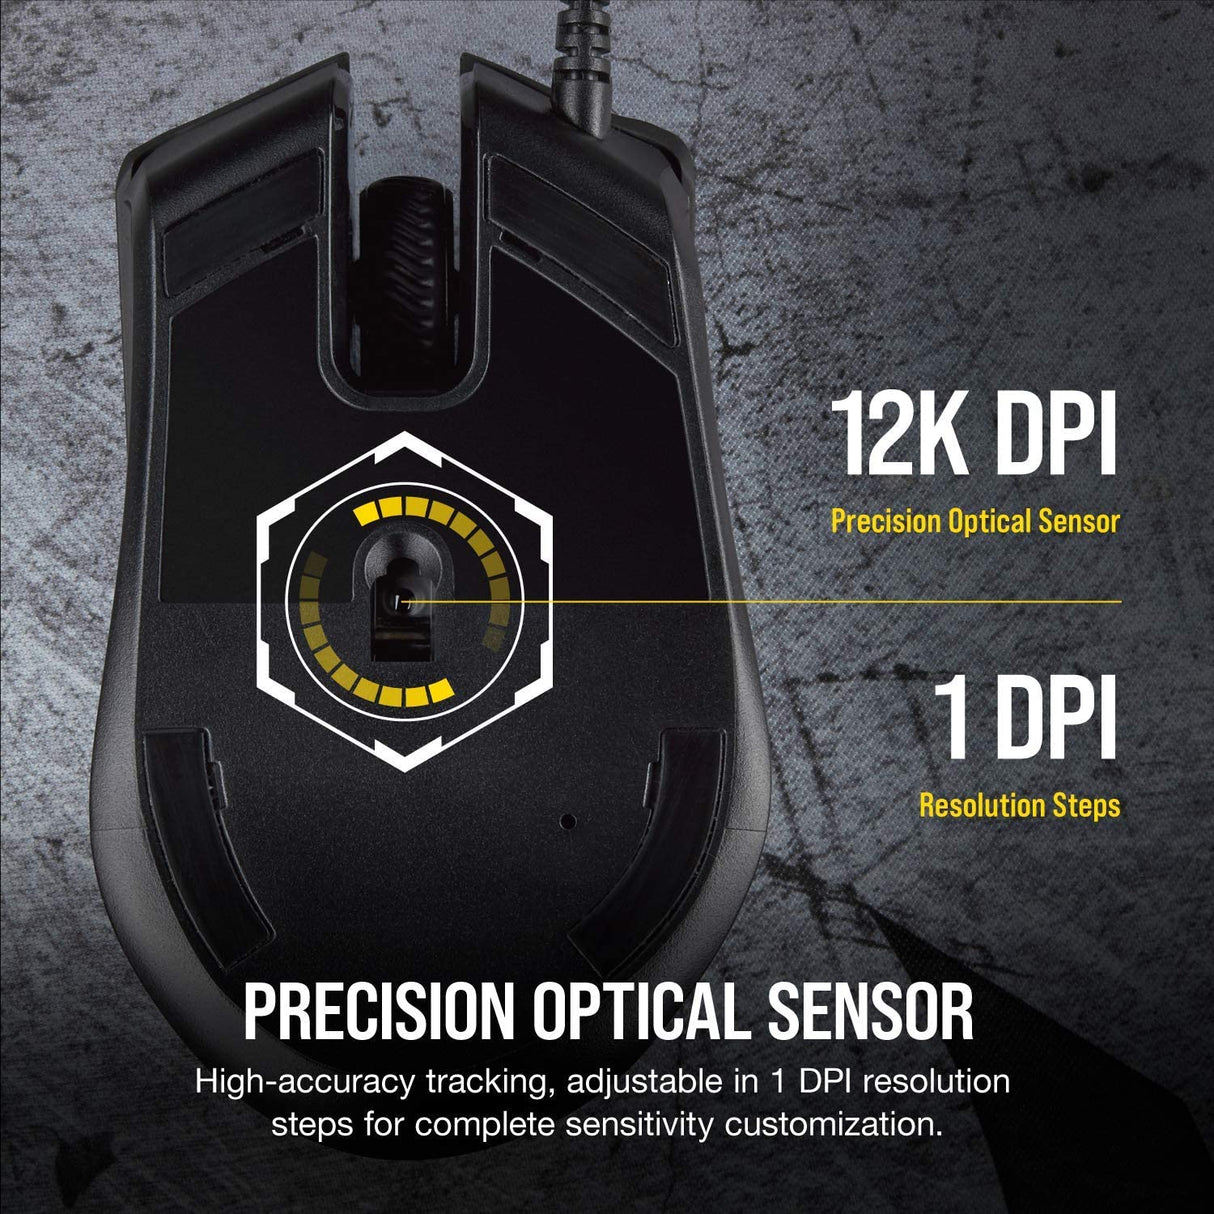 Corsair Harpoon PRO - RGB Gaming Mouse - Lightweight Design - 12,000 DPI Optical Sensor, Wired Pro